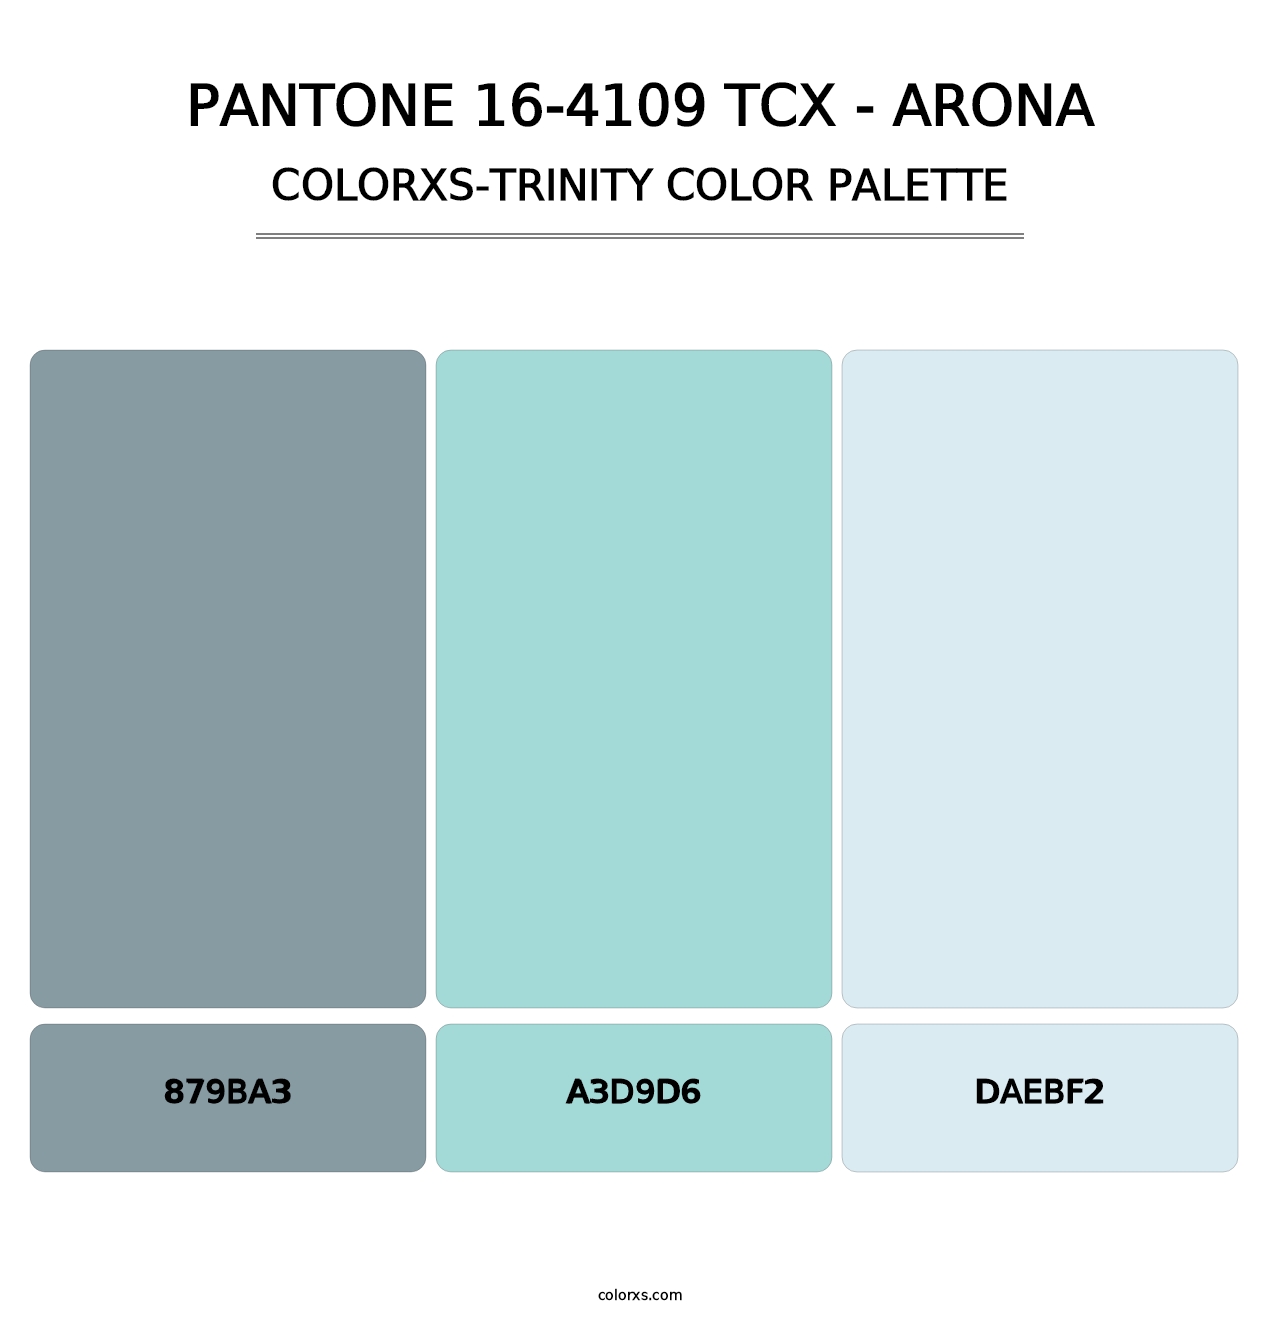 PANTONE 16-4109 TCX - Arona - Colorxs Trinity Palette